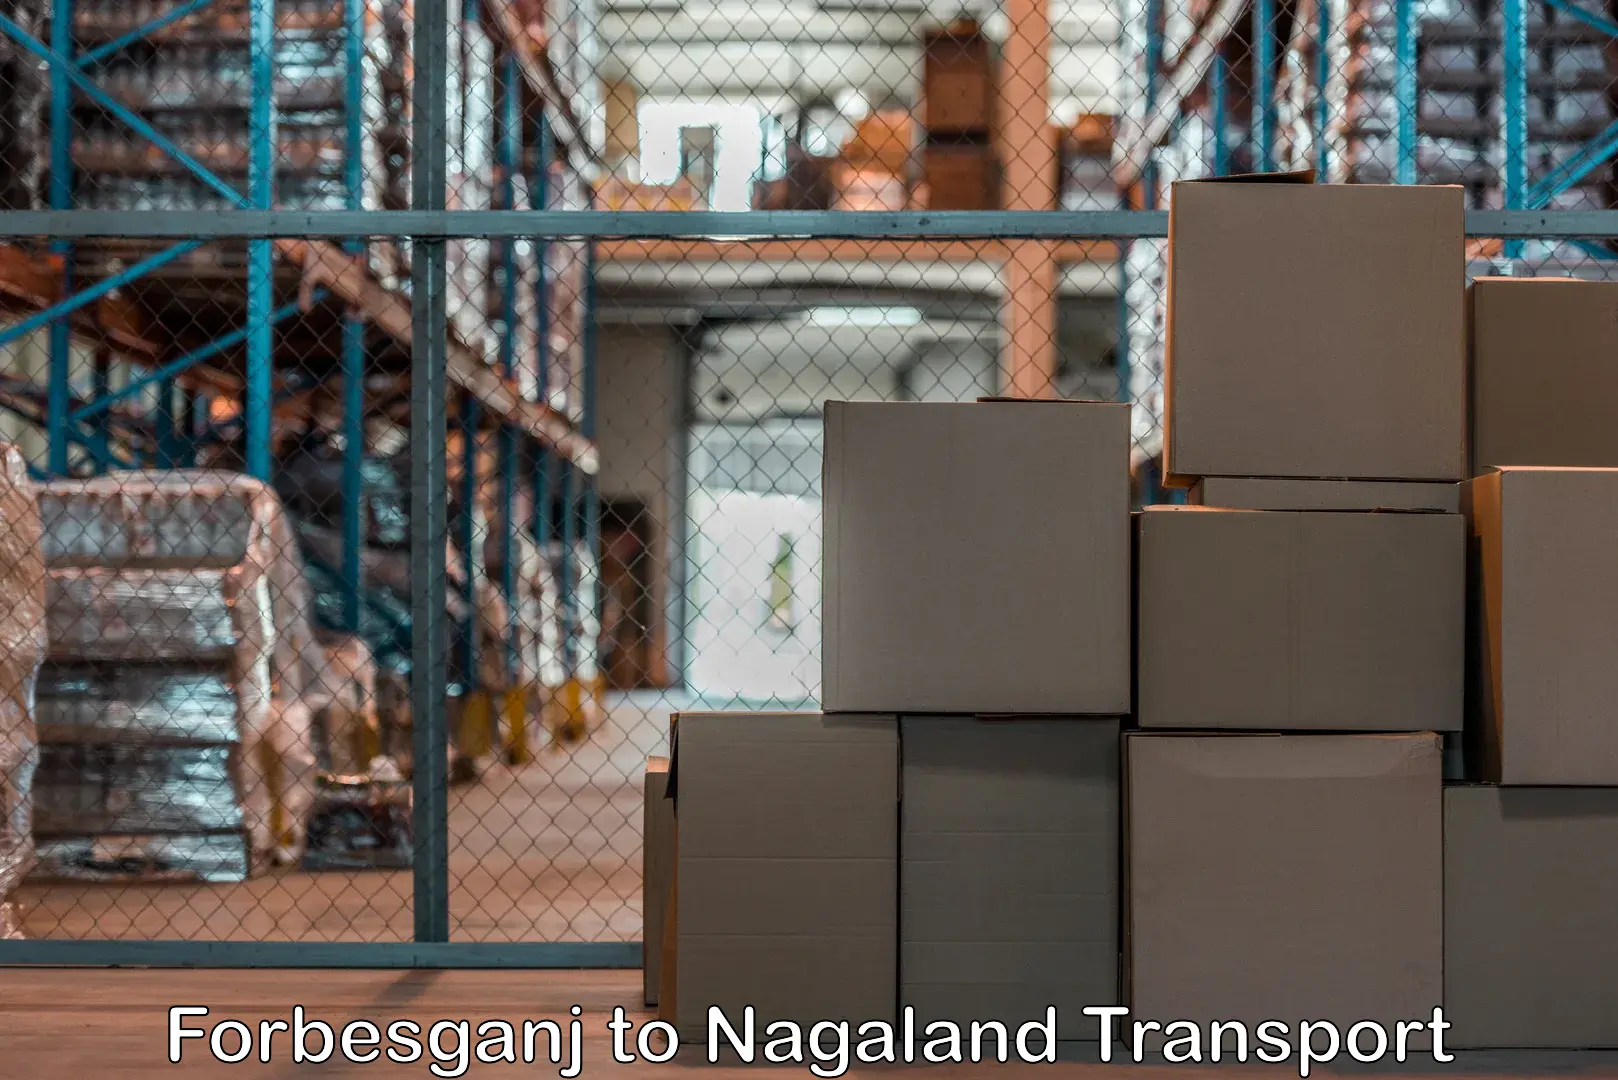 Online transport service Forbesganj to Nagaland